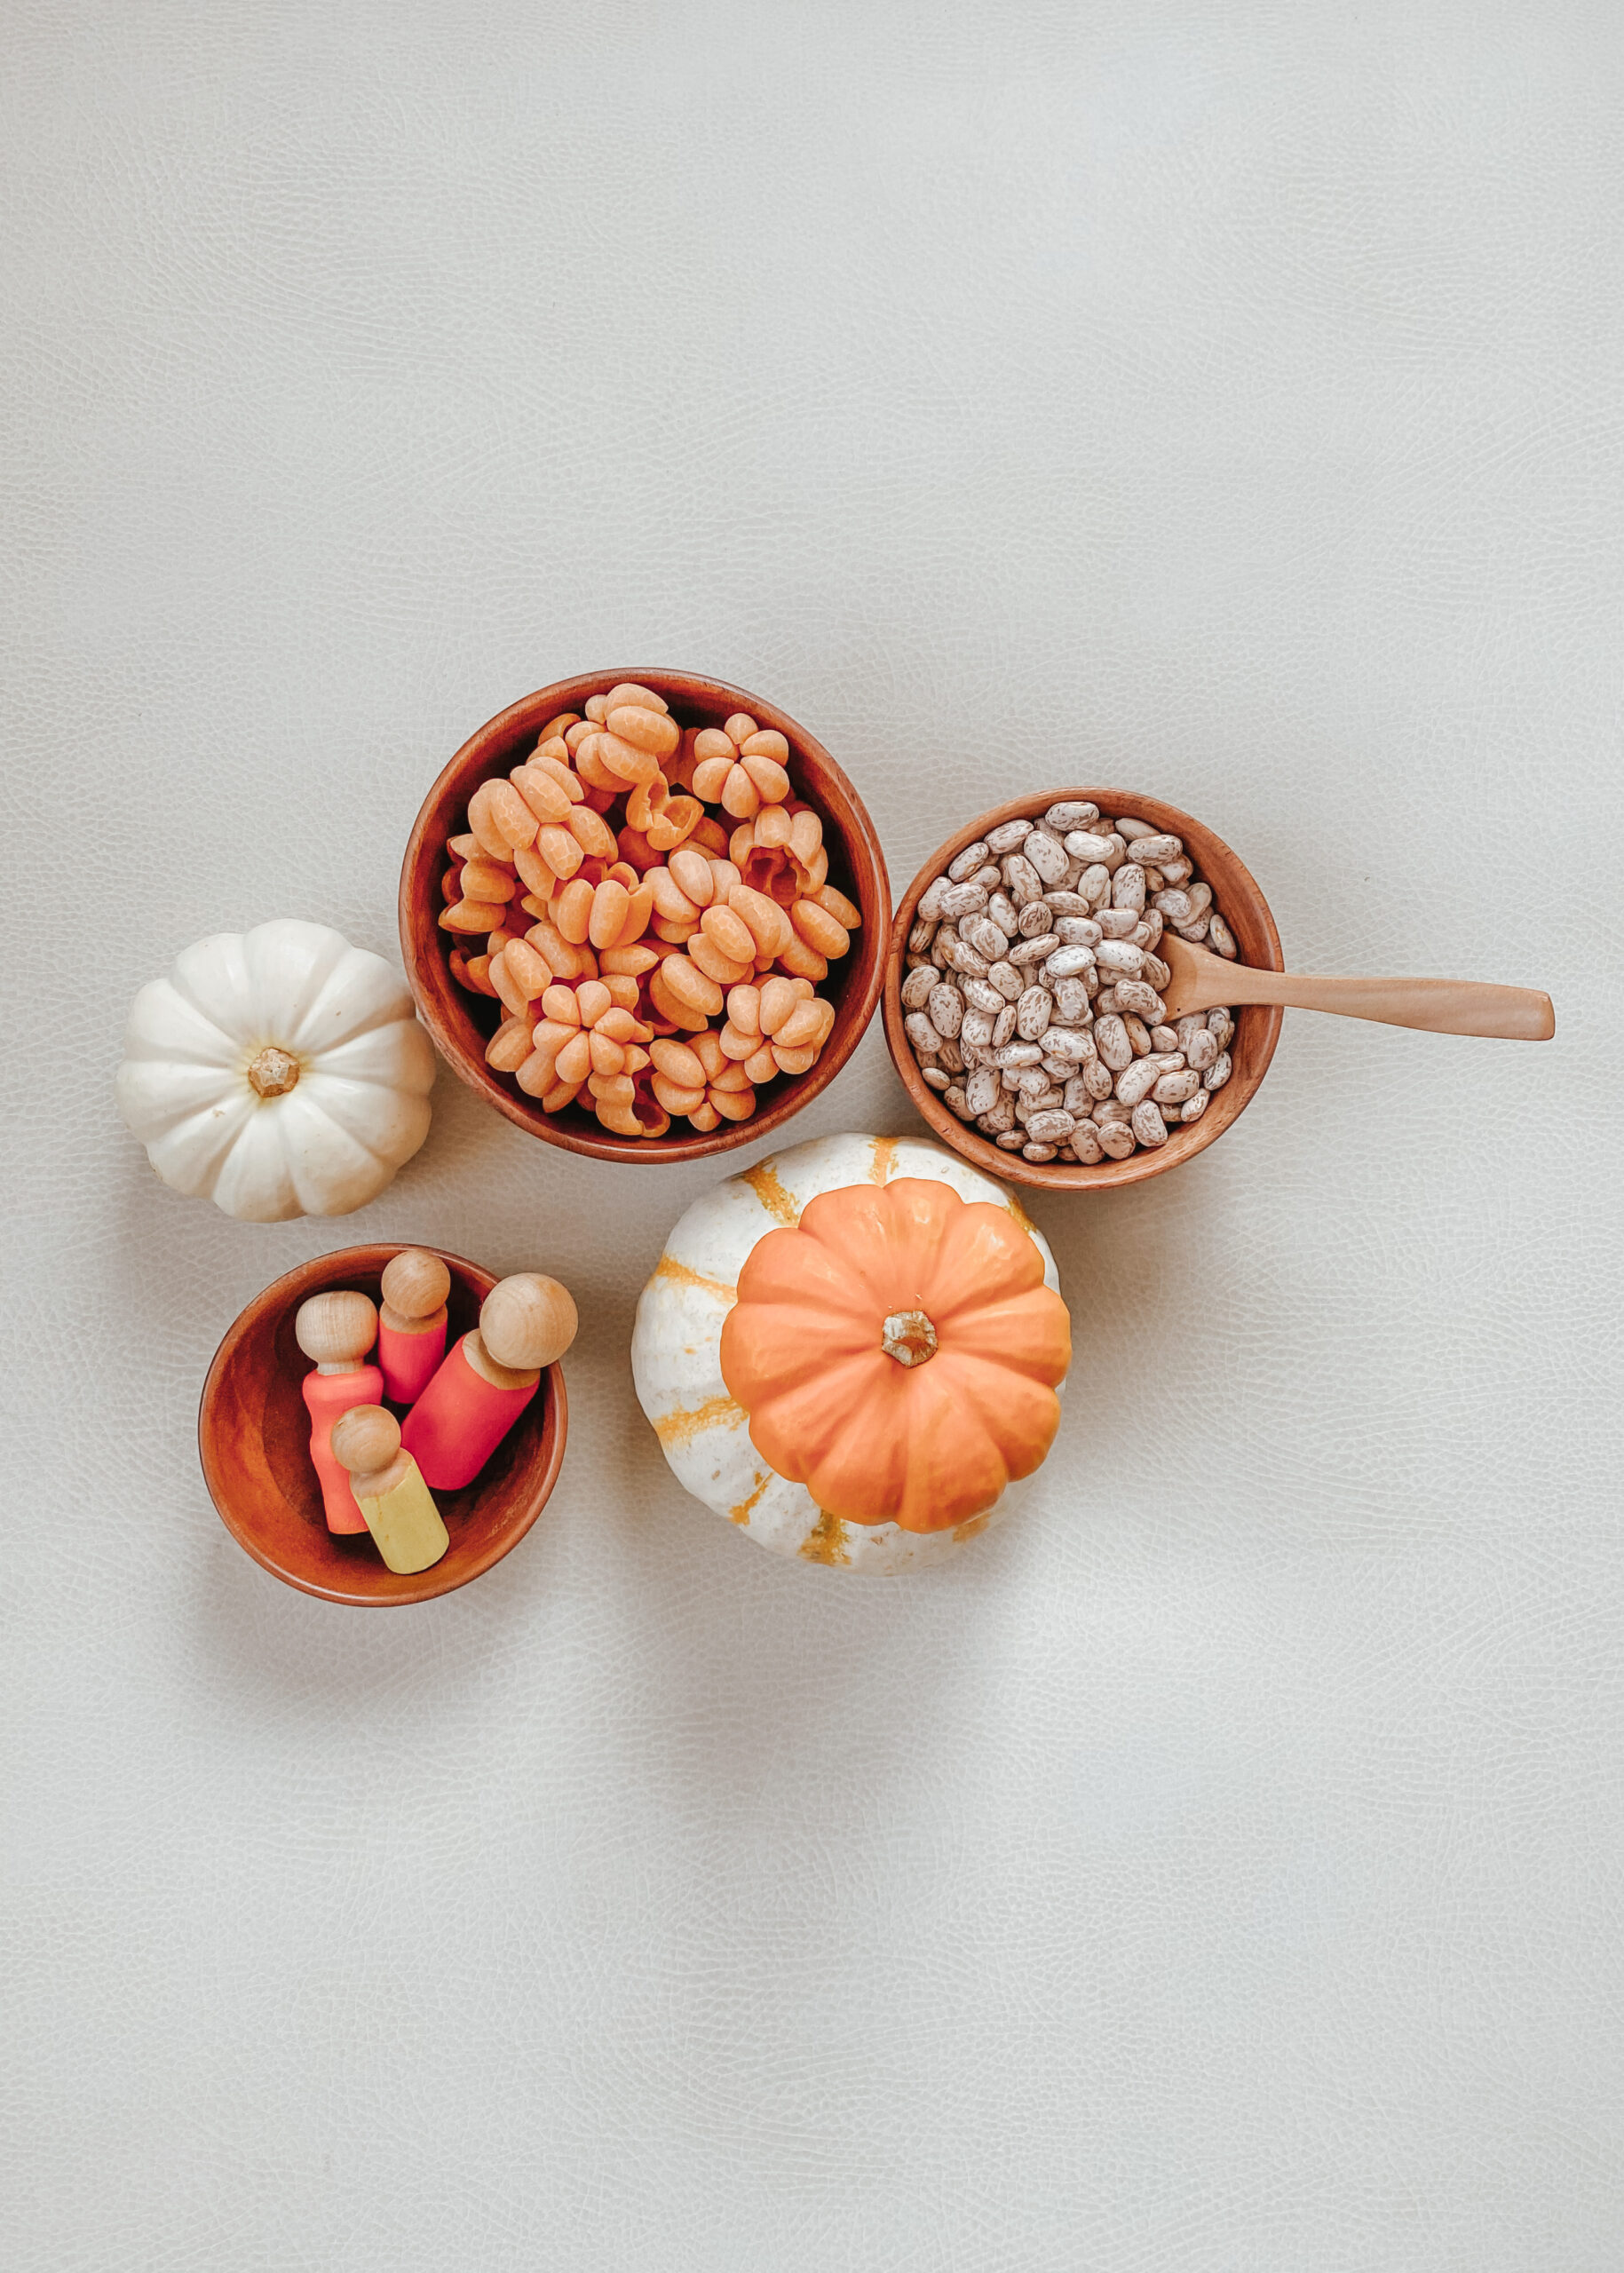 Fall sensory bin idea with small bowls, pumpkin pasta, pinto beans + nin peg dolls